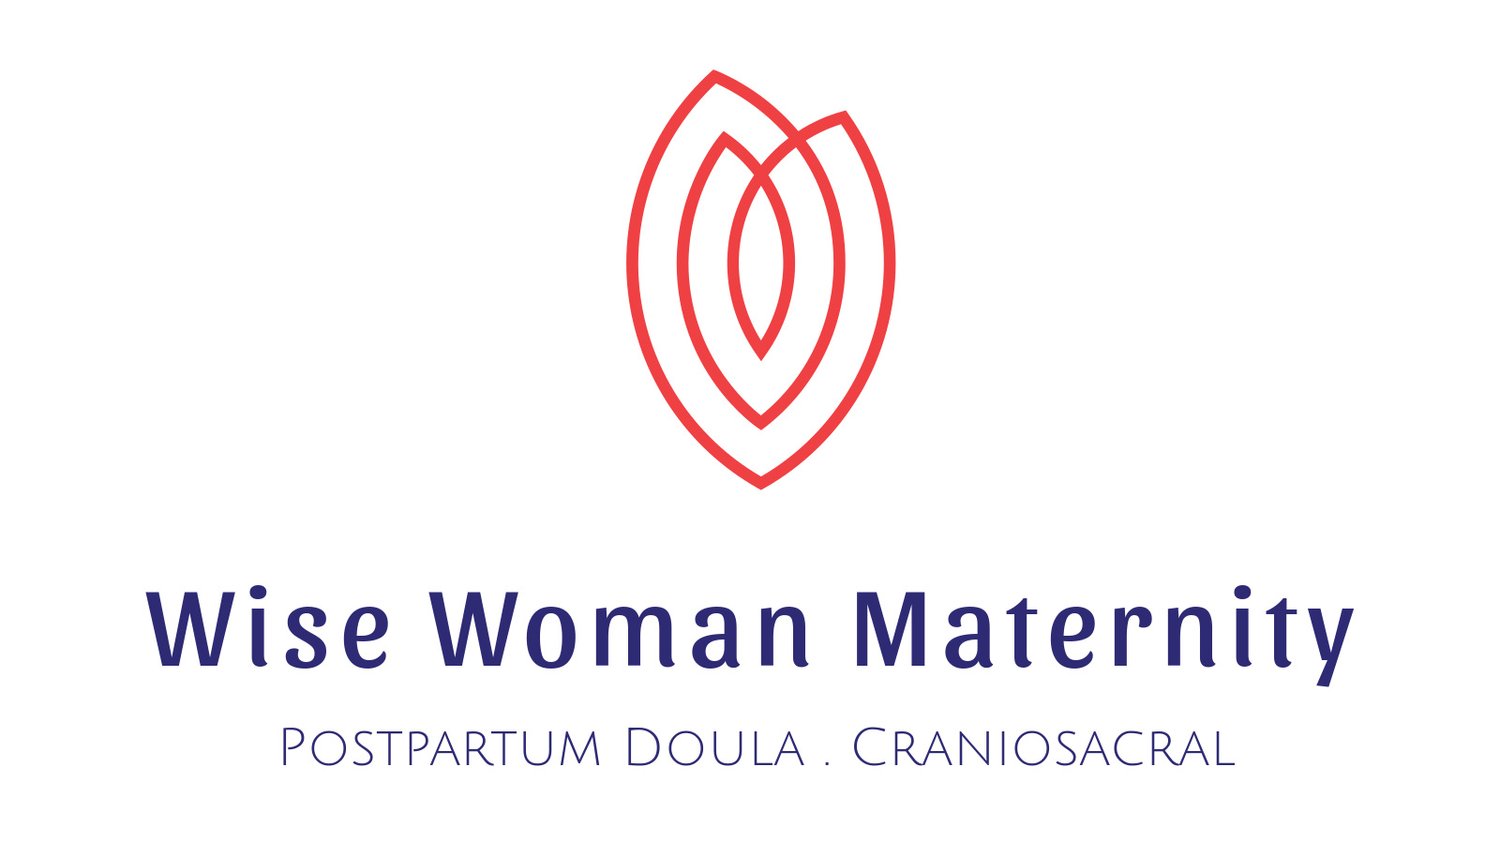 Wise Woman Maternity - Postpartum Doula - Craniosacral - Wochenbettdoula ganzheitlich &amp; traditionell in Basel 